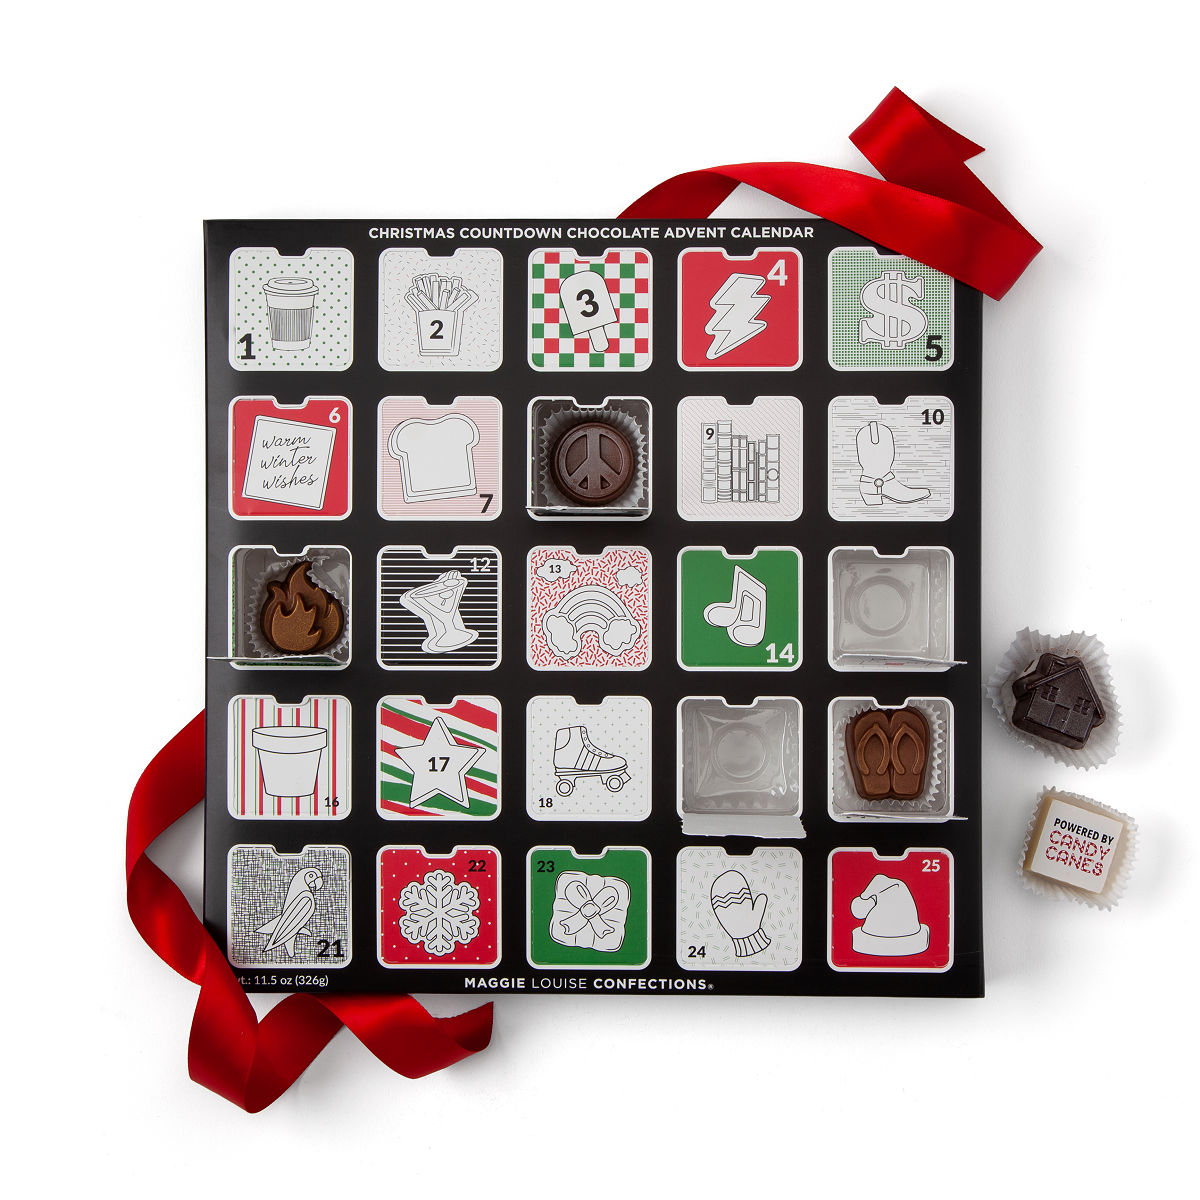 Edible Artwork Chocolate Advent Calendar Holiday Gifts, Christmas